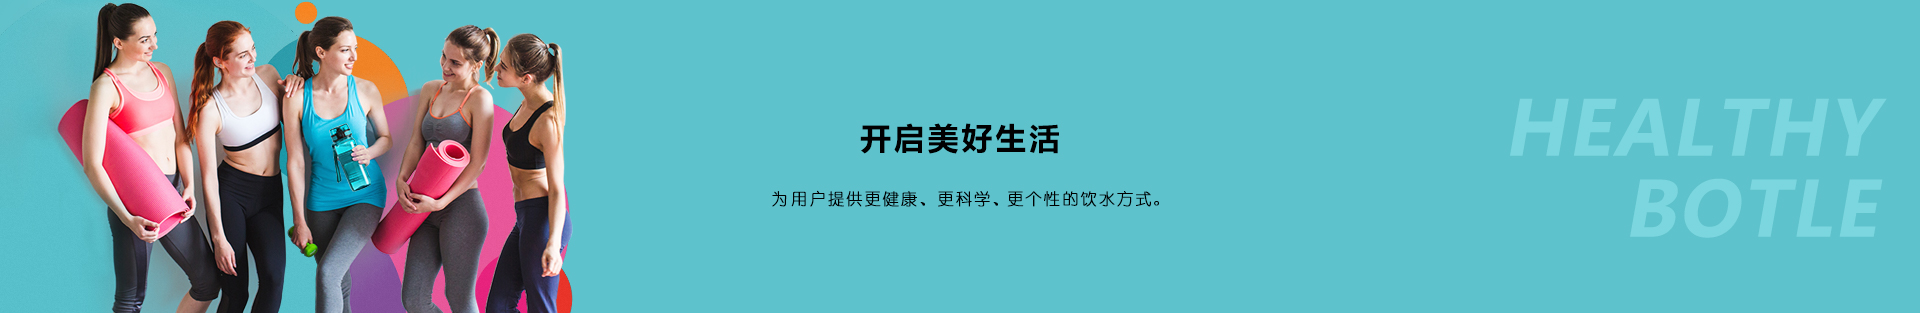 江南体育banner